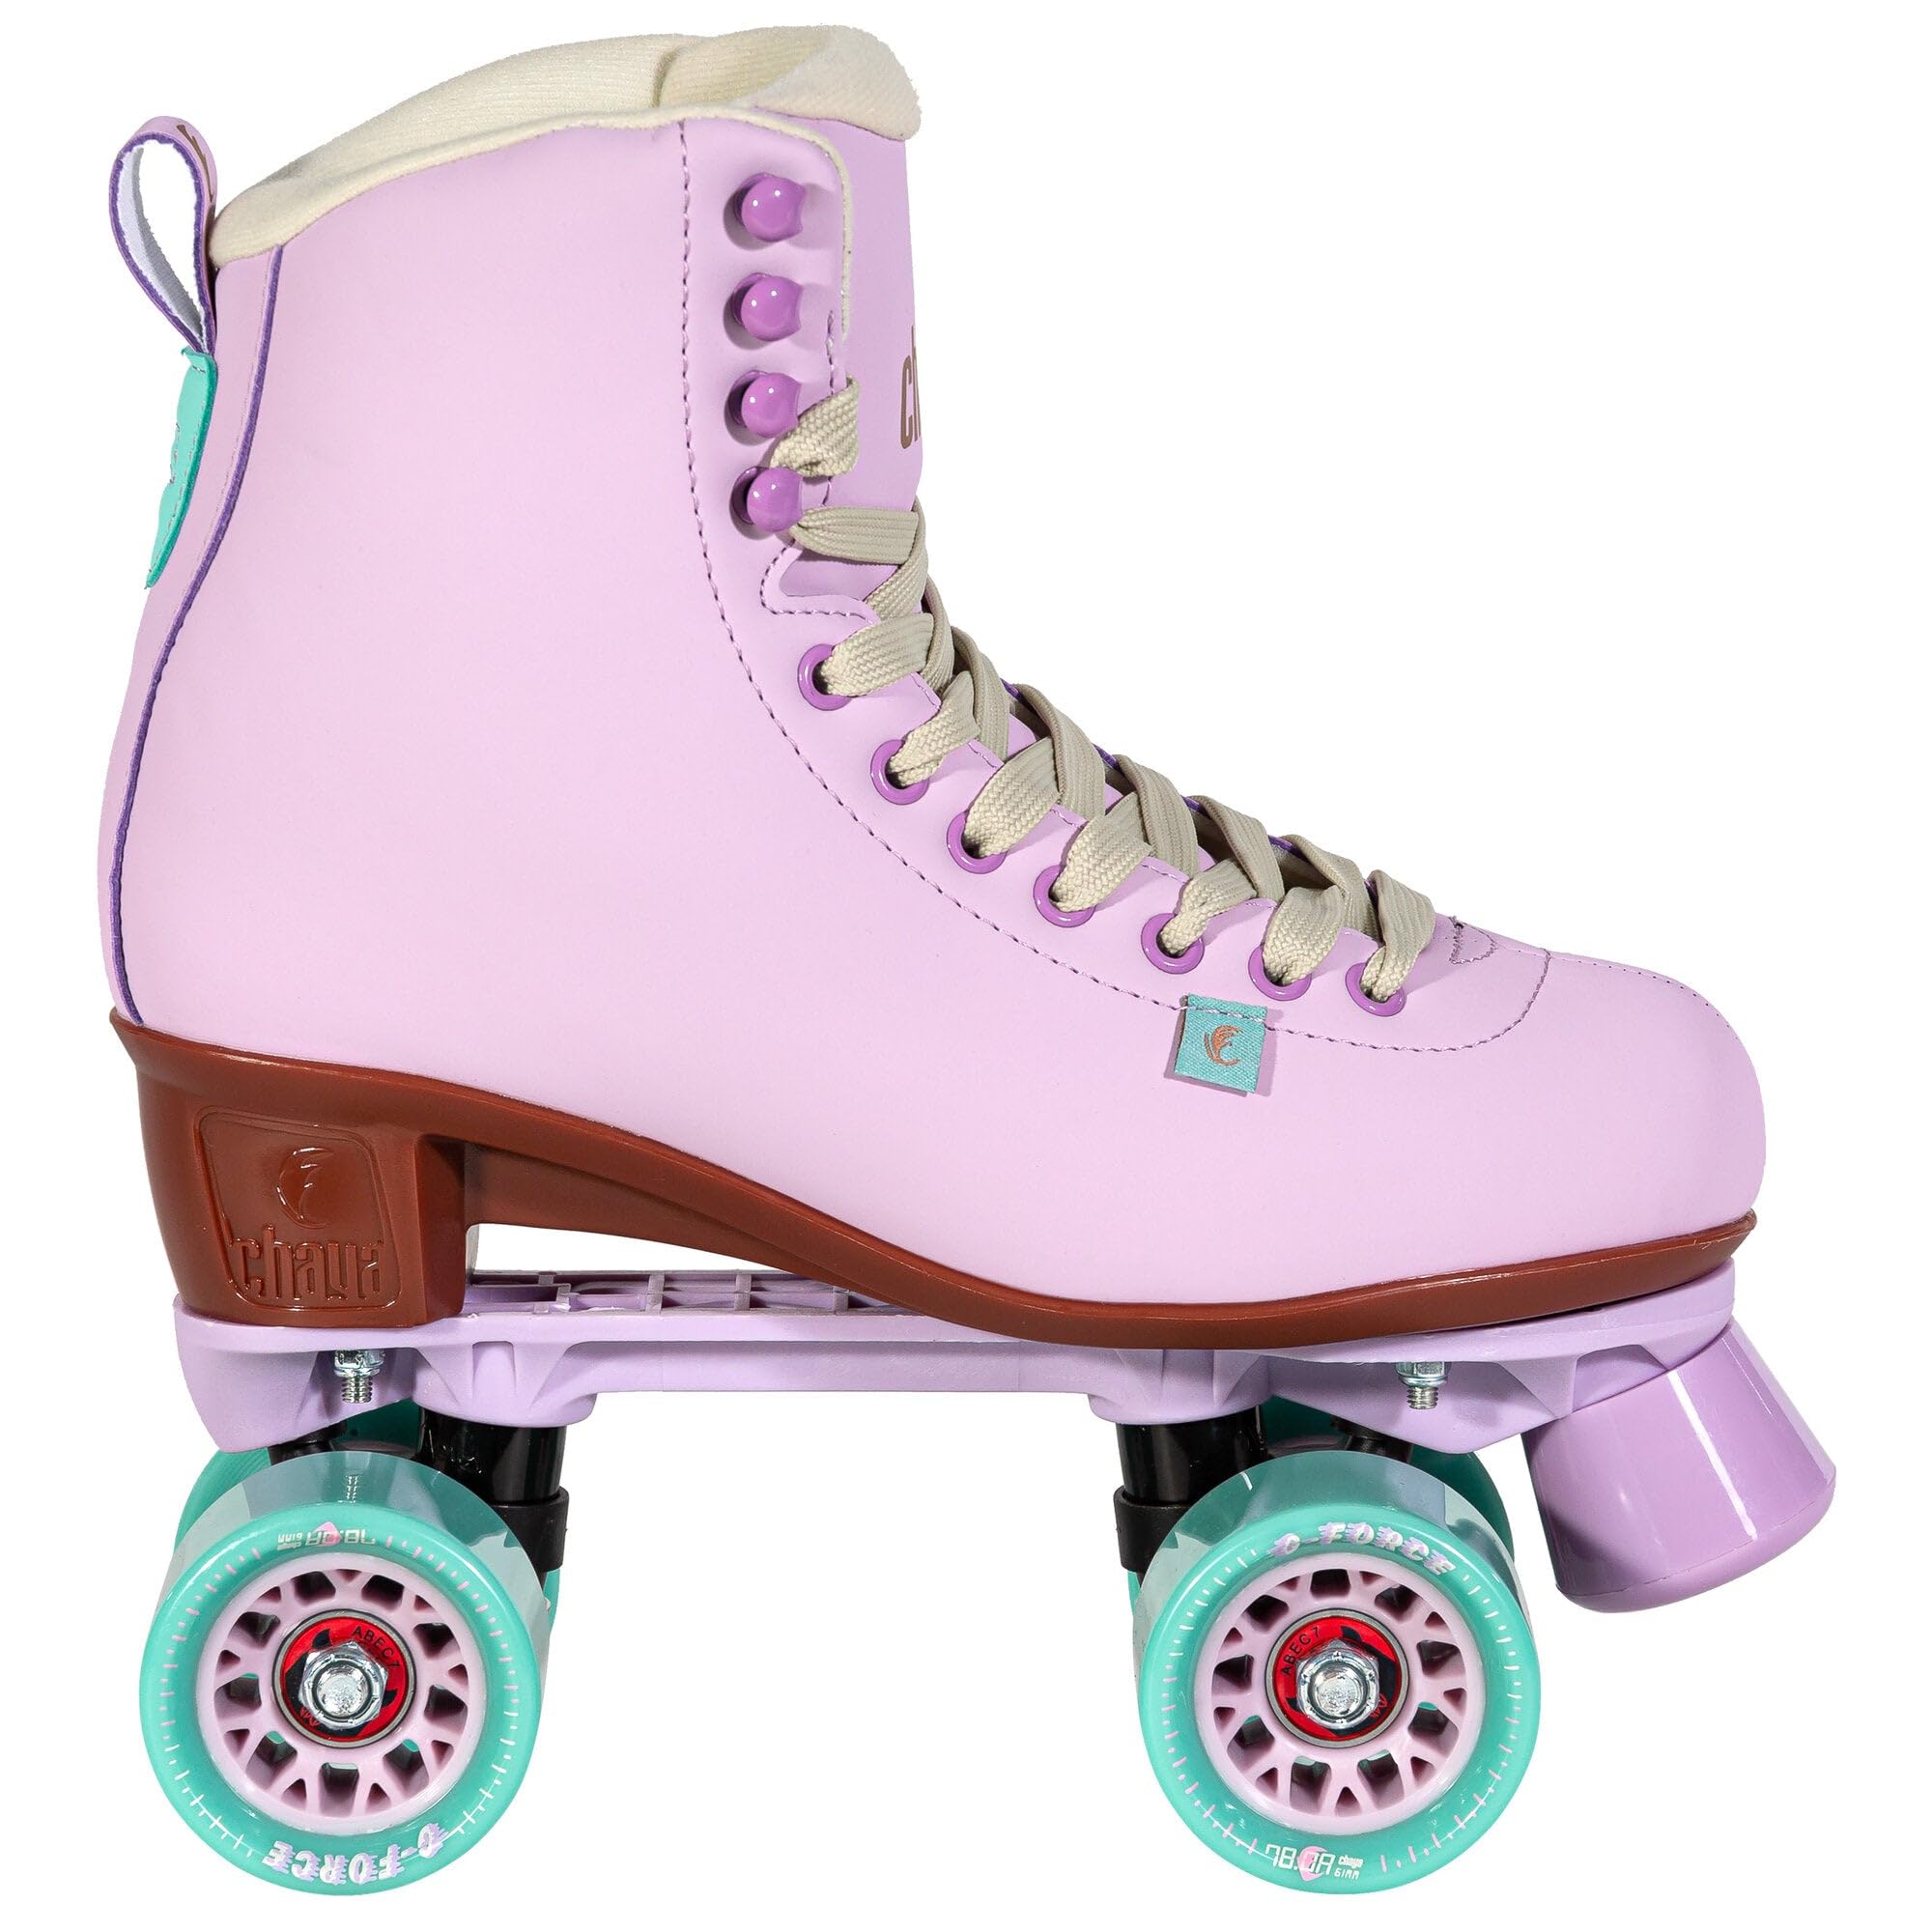 Chaya Roller Skates Melrose Lavender für Damen in Lila, 61mm/78A Rollen, ABEC 7 Kugellager, Art. nr.: 810724